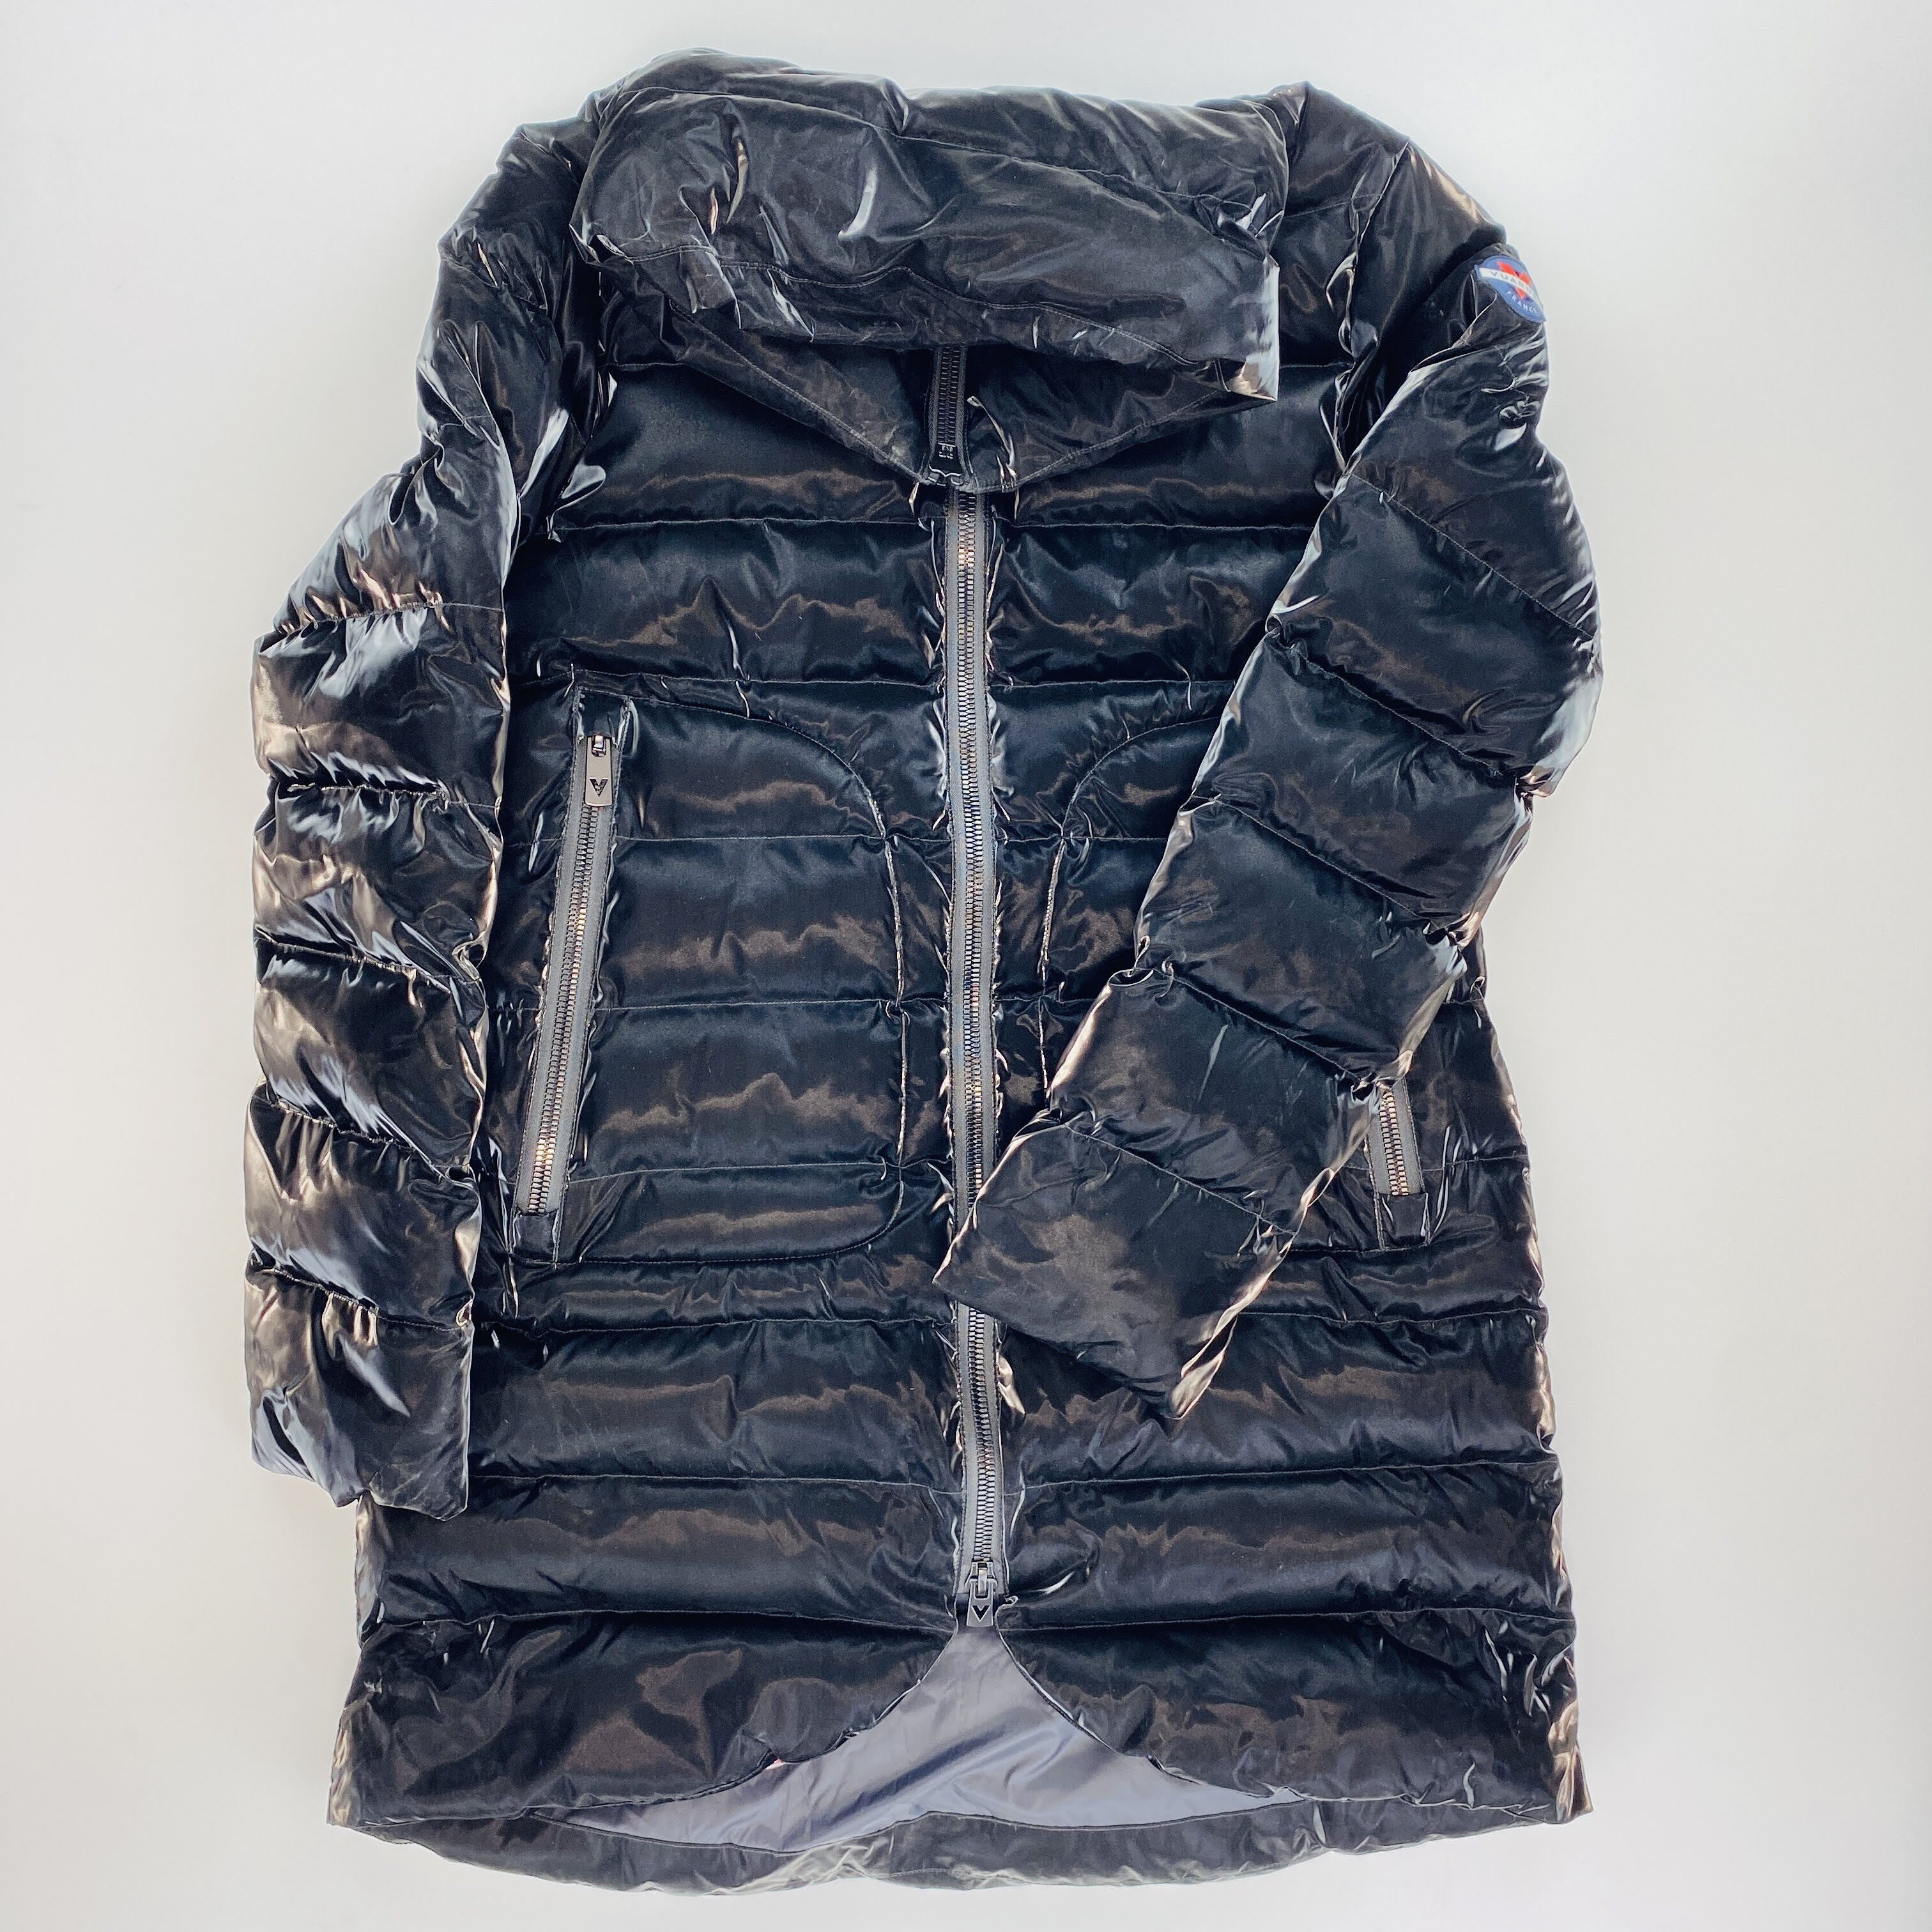 Vuarnet Eyre Jacket - Giacca sintetica di seconda mano - Donna - Nero - S | Hardloop